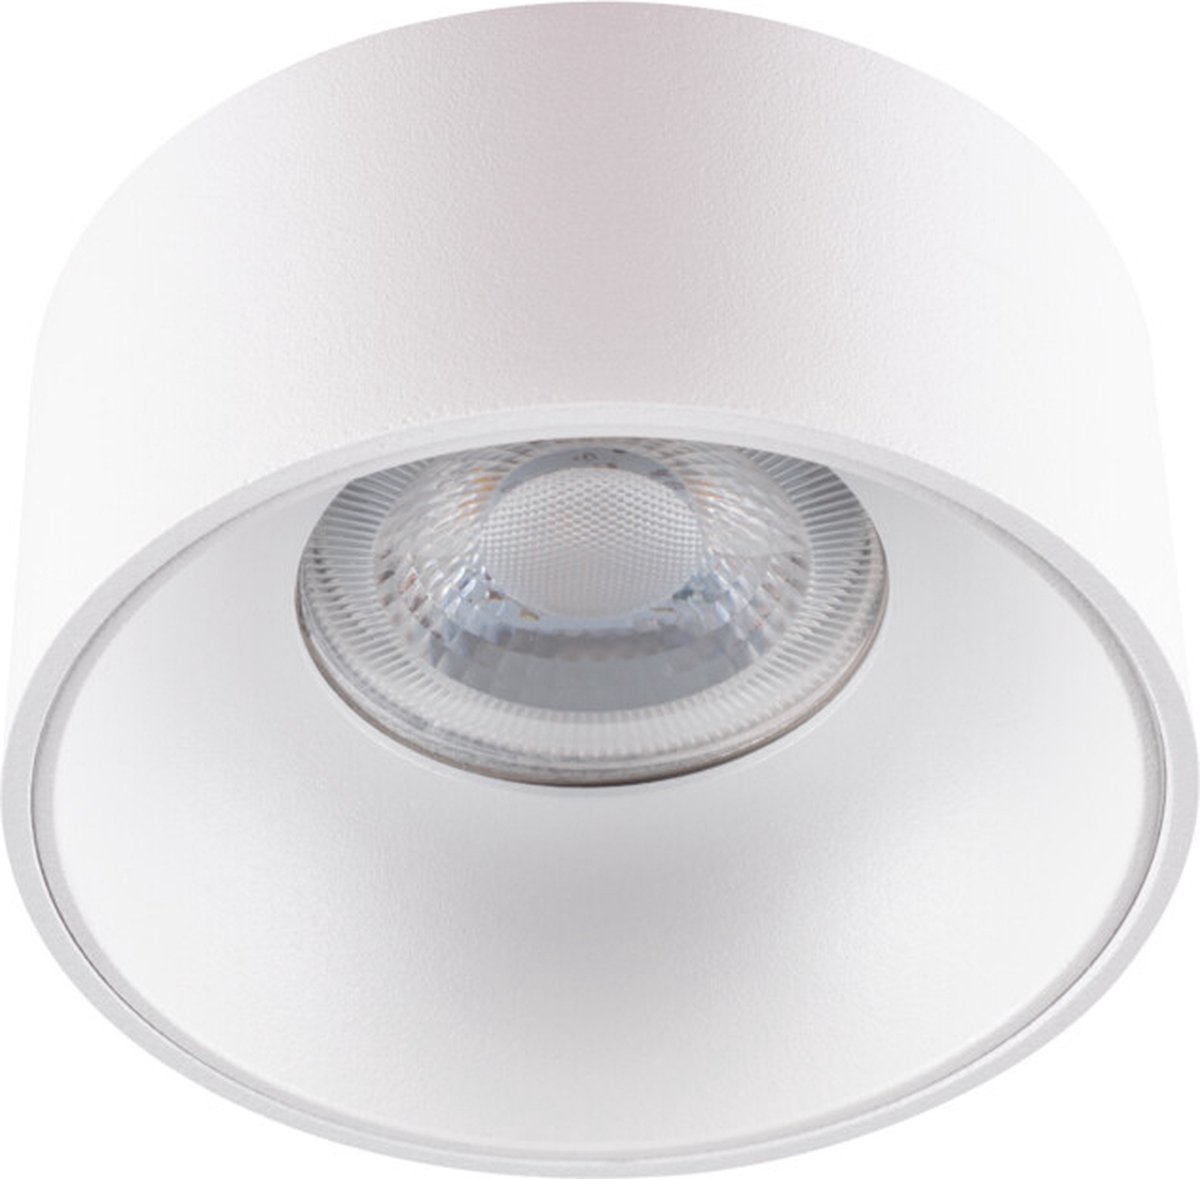 Kanlux S.A. - LED GU10 plafondspot wit rond - Enkelvoudig voor 1 LED GU10 spot